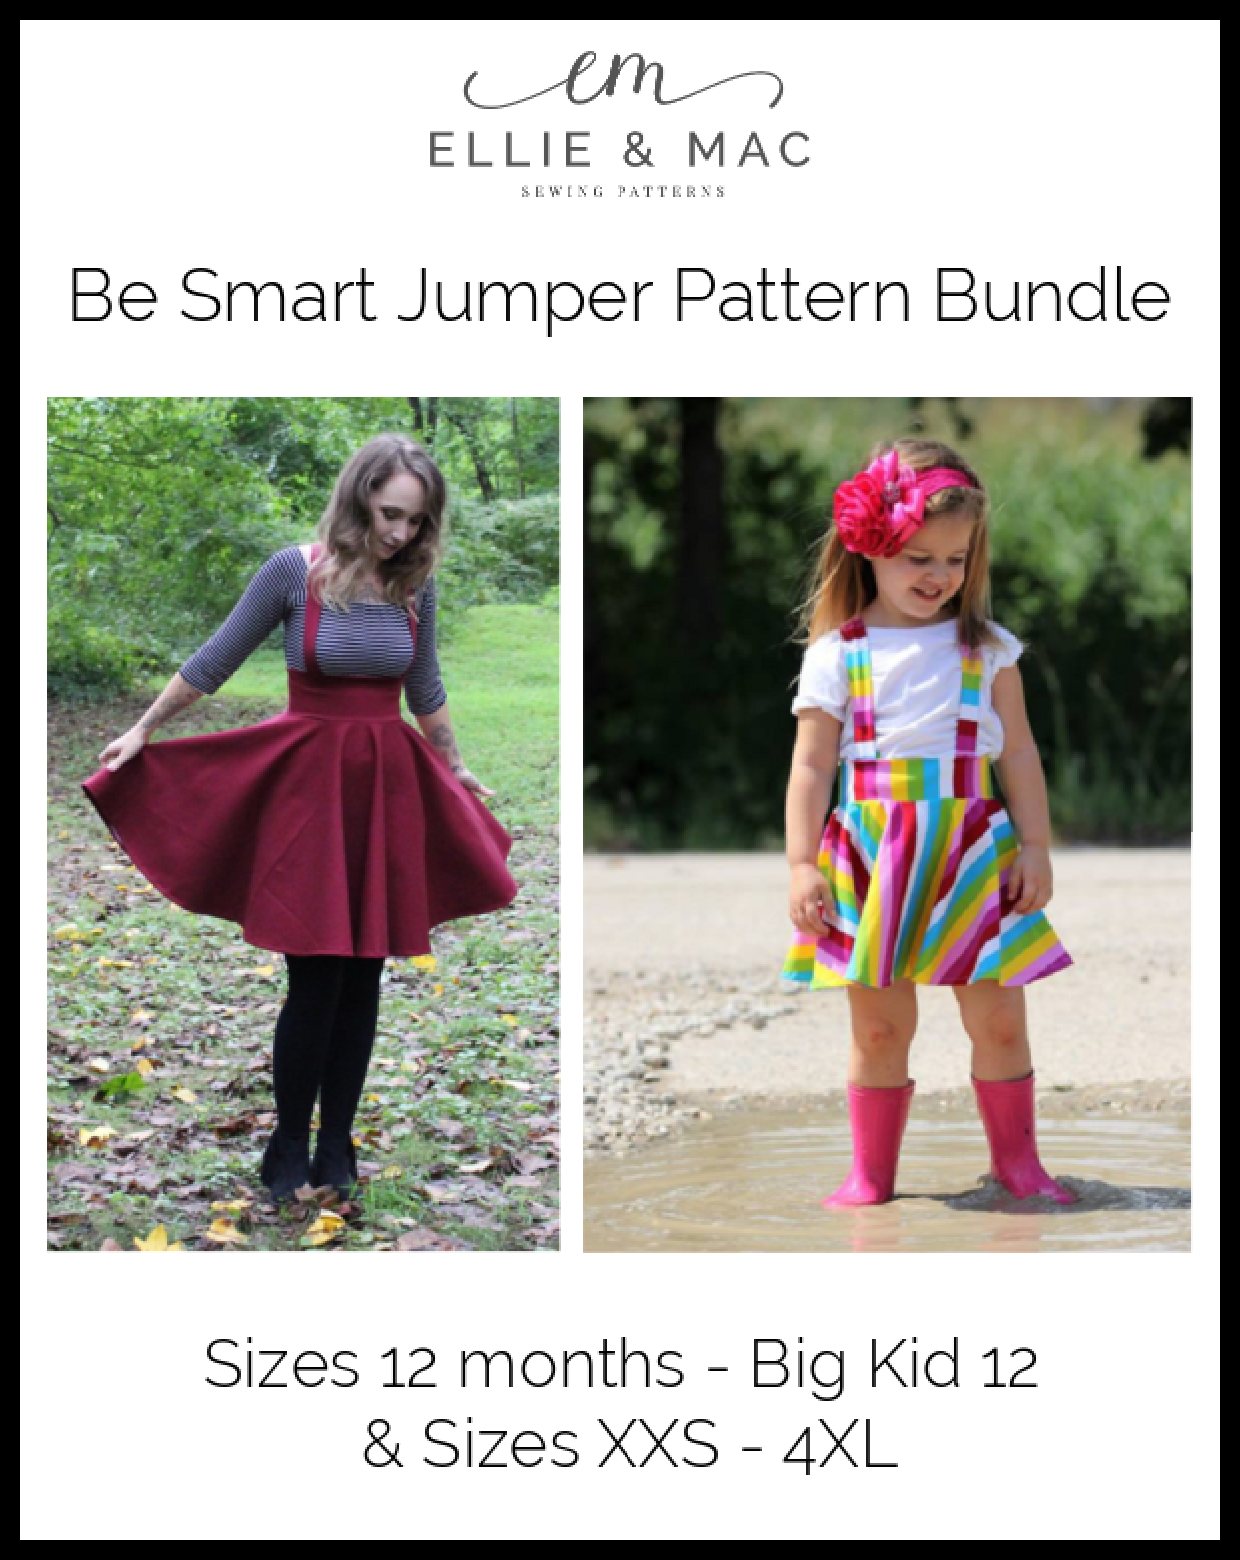 Be Smart Jumper Pattern Bundle